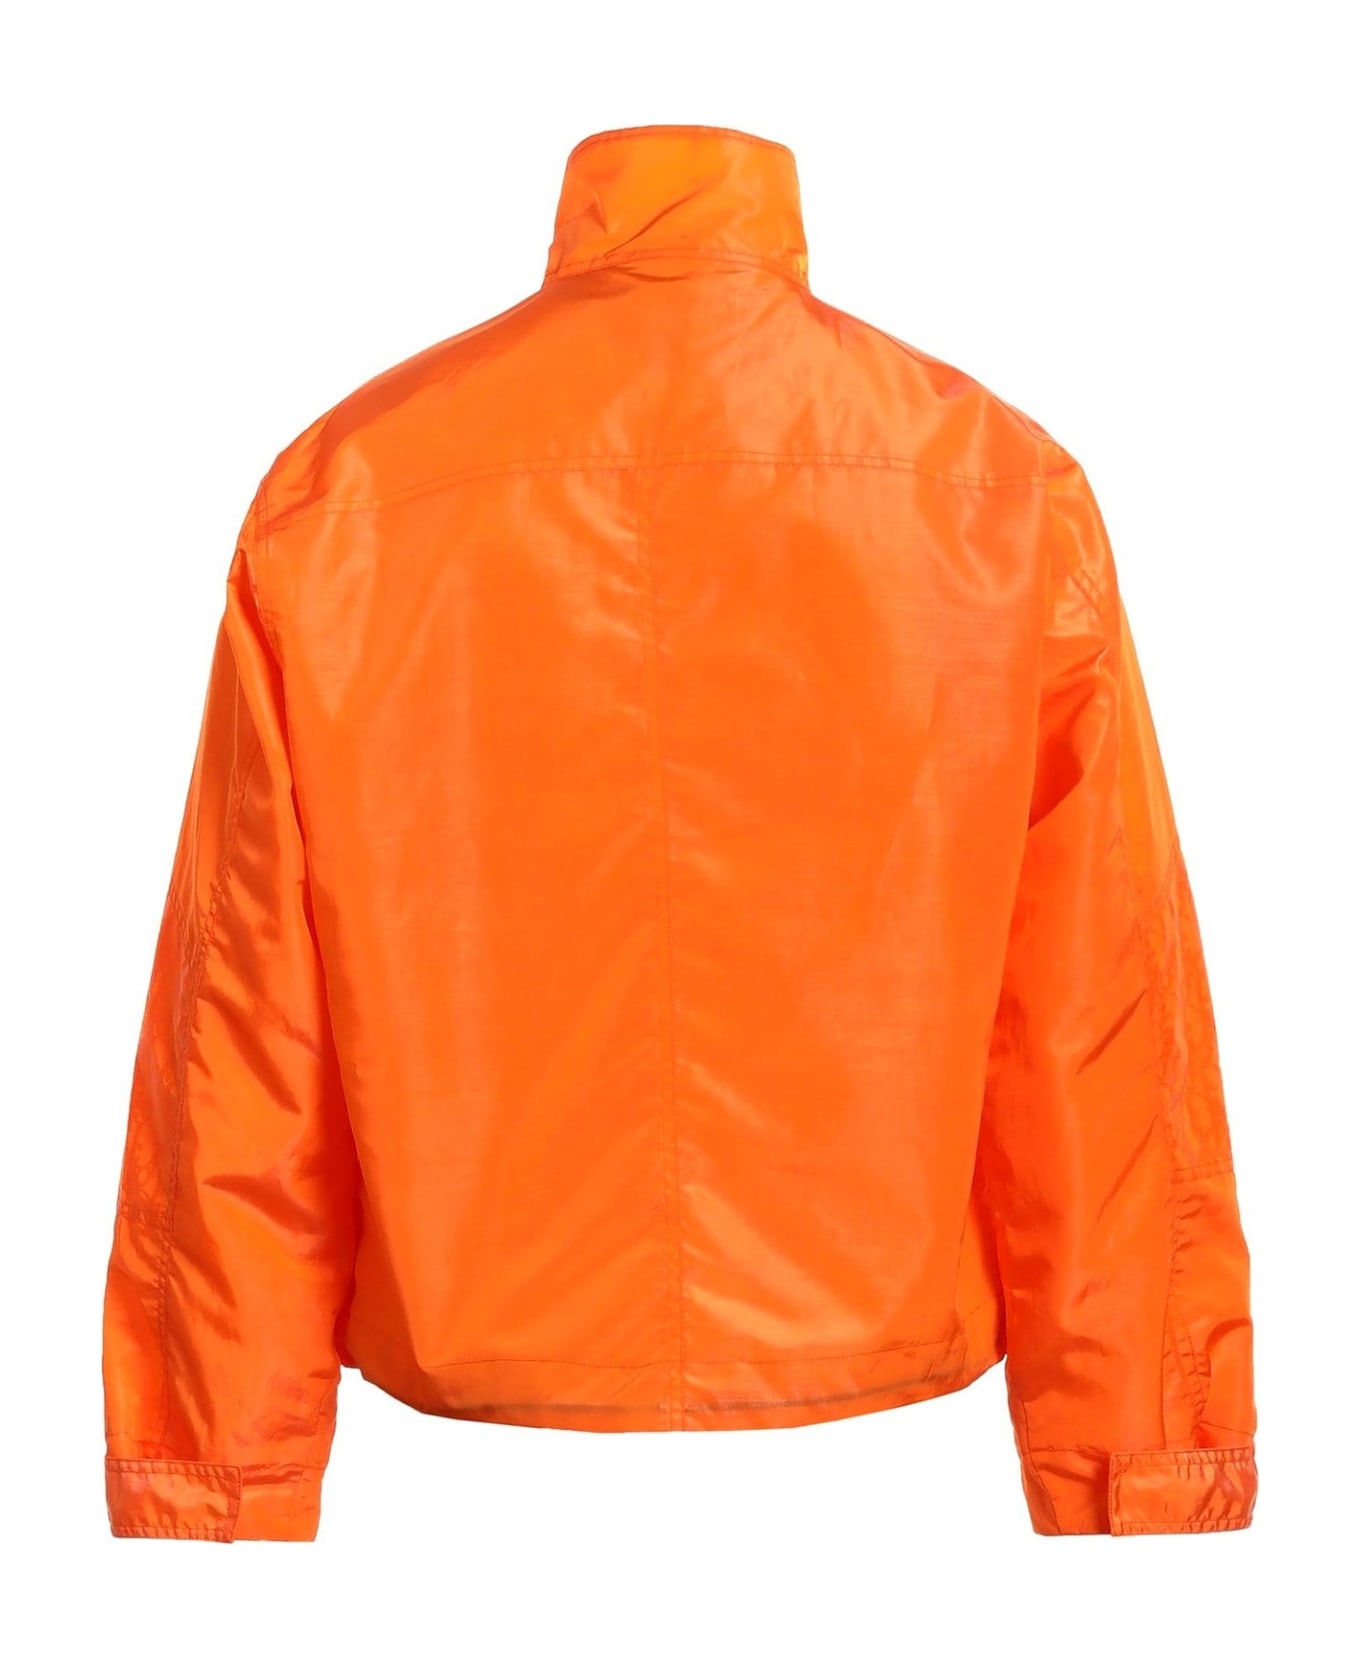 Dior Windbreaker Jacket - Orange ジャケット